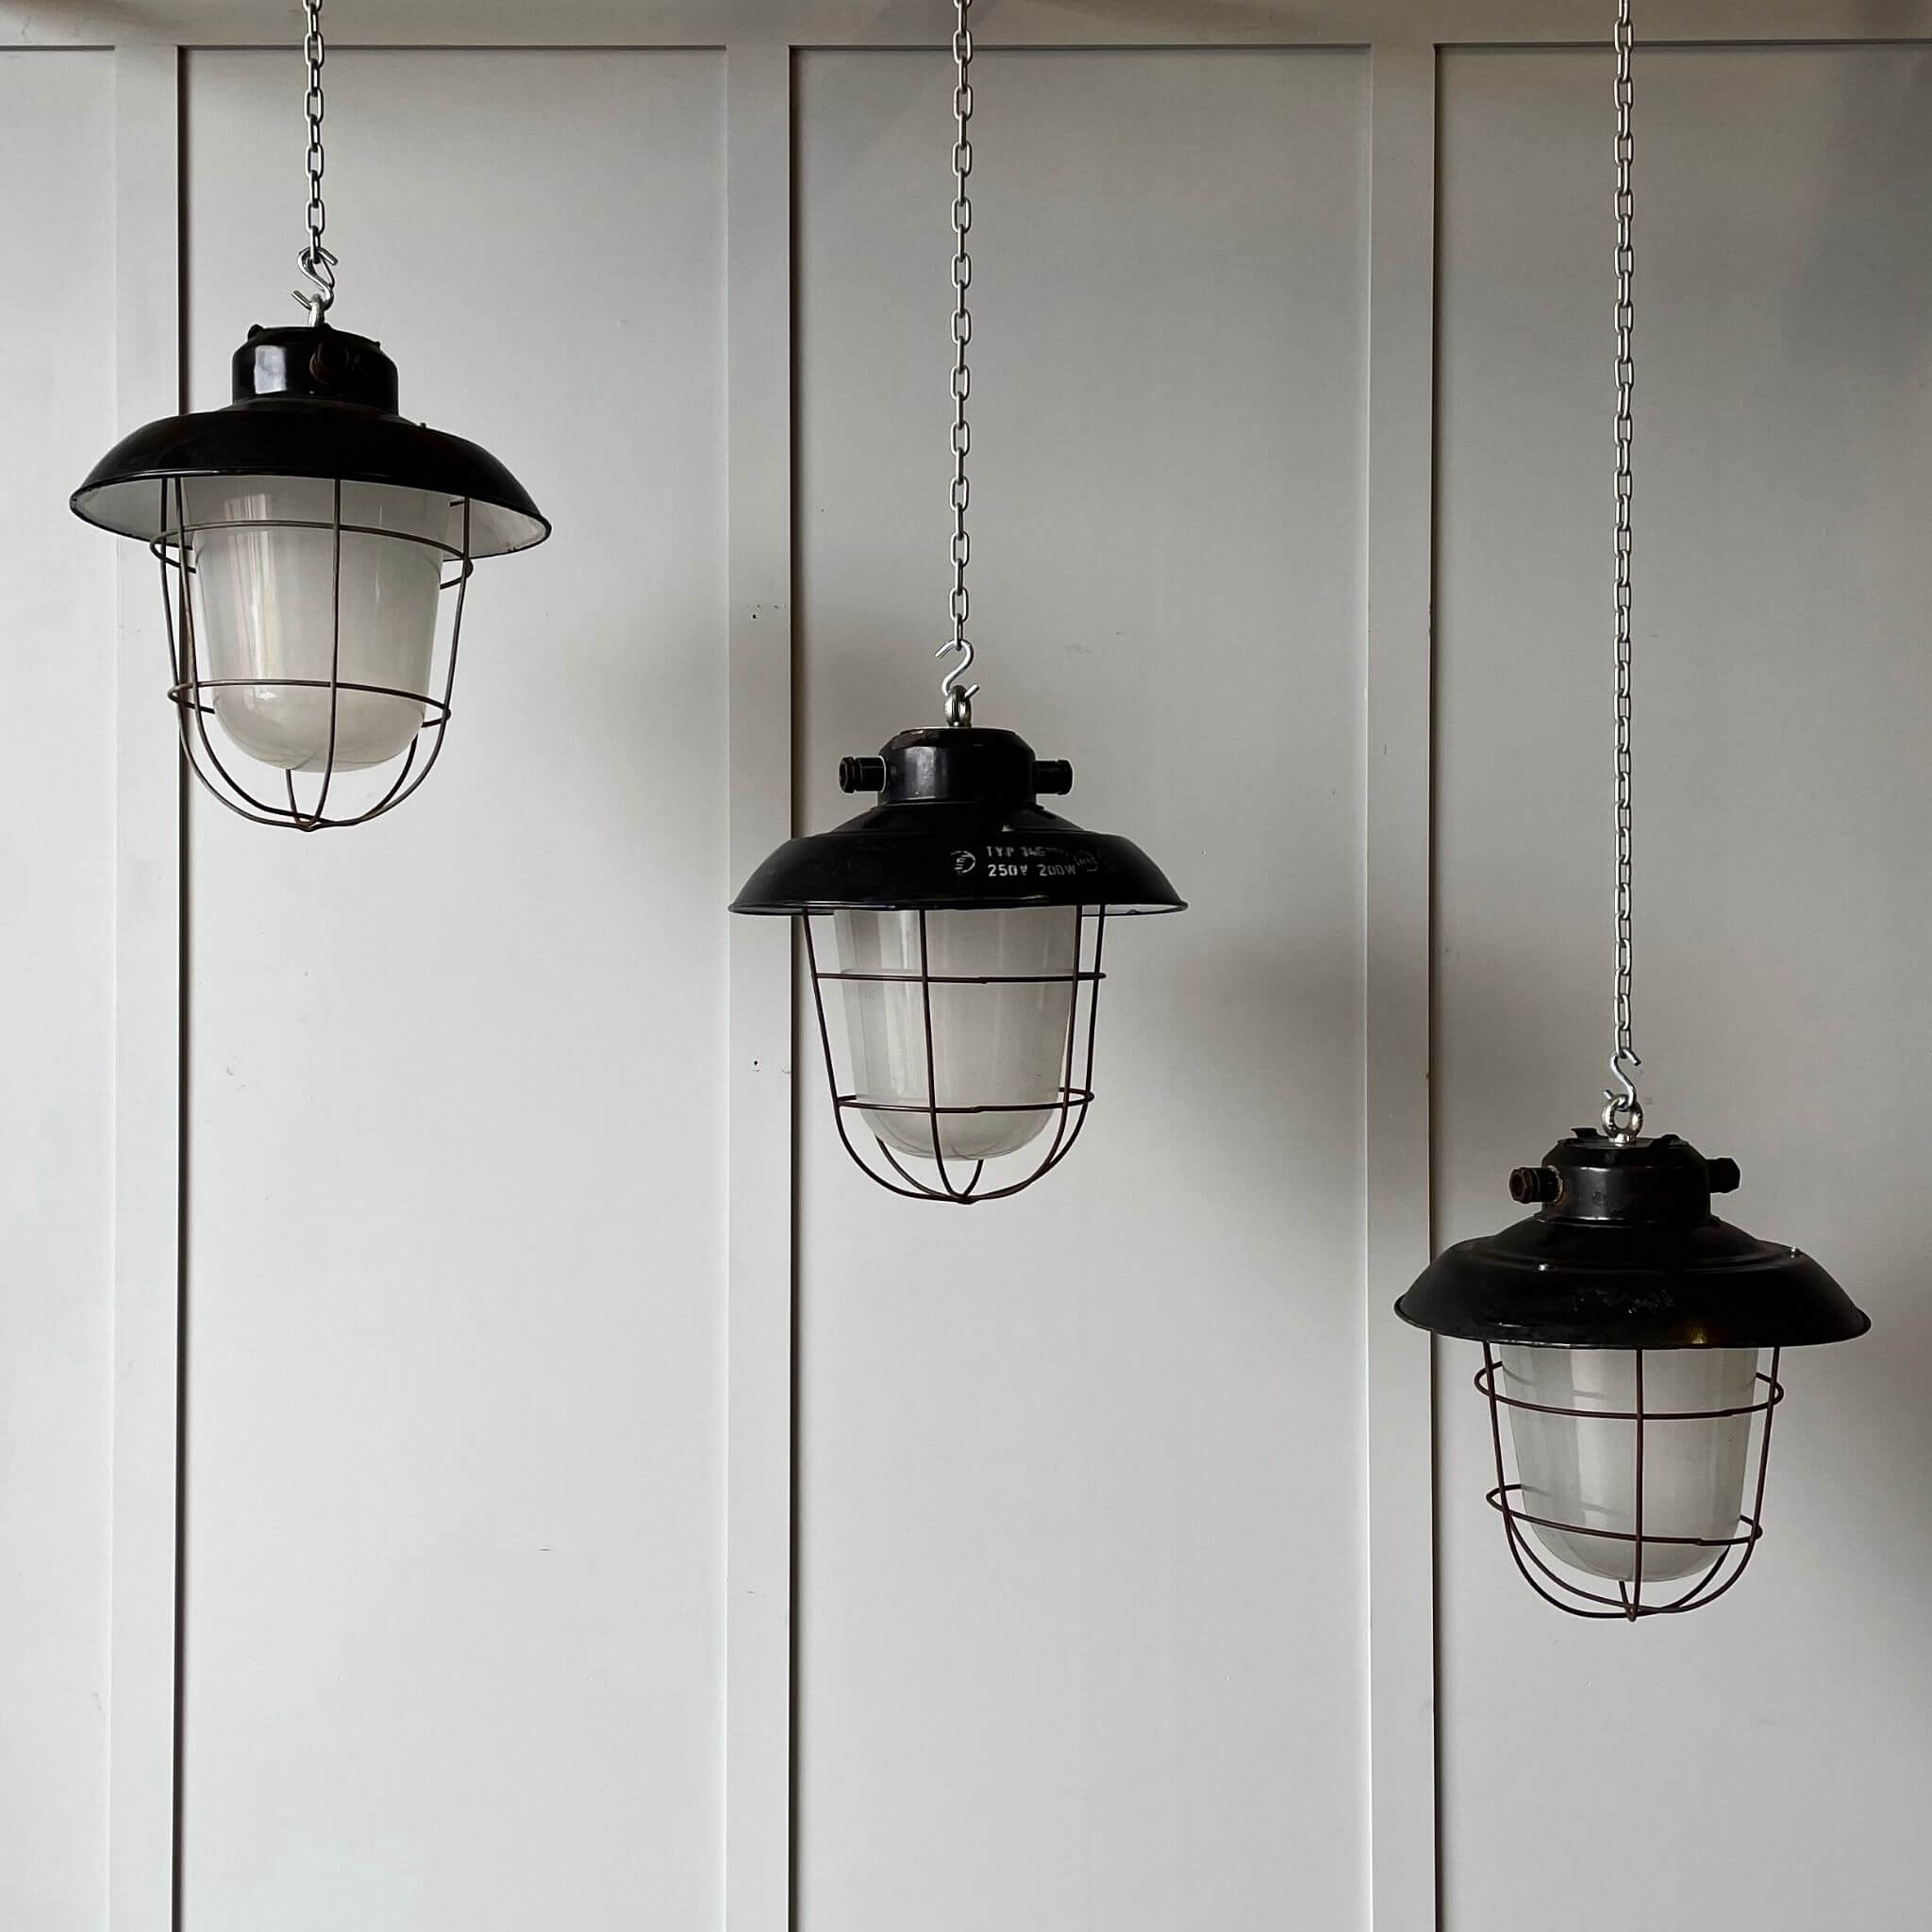 Hanging vintage industrial lighting for home decor